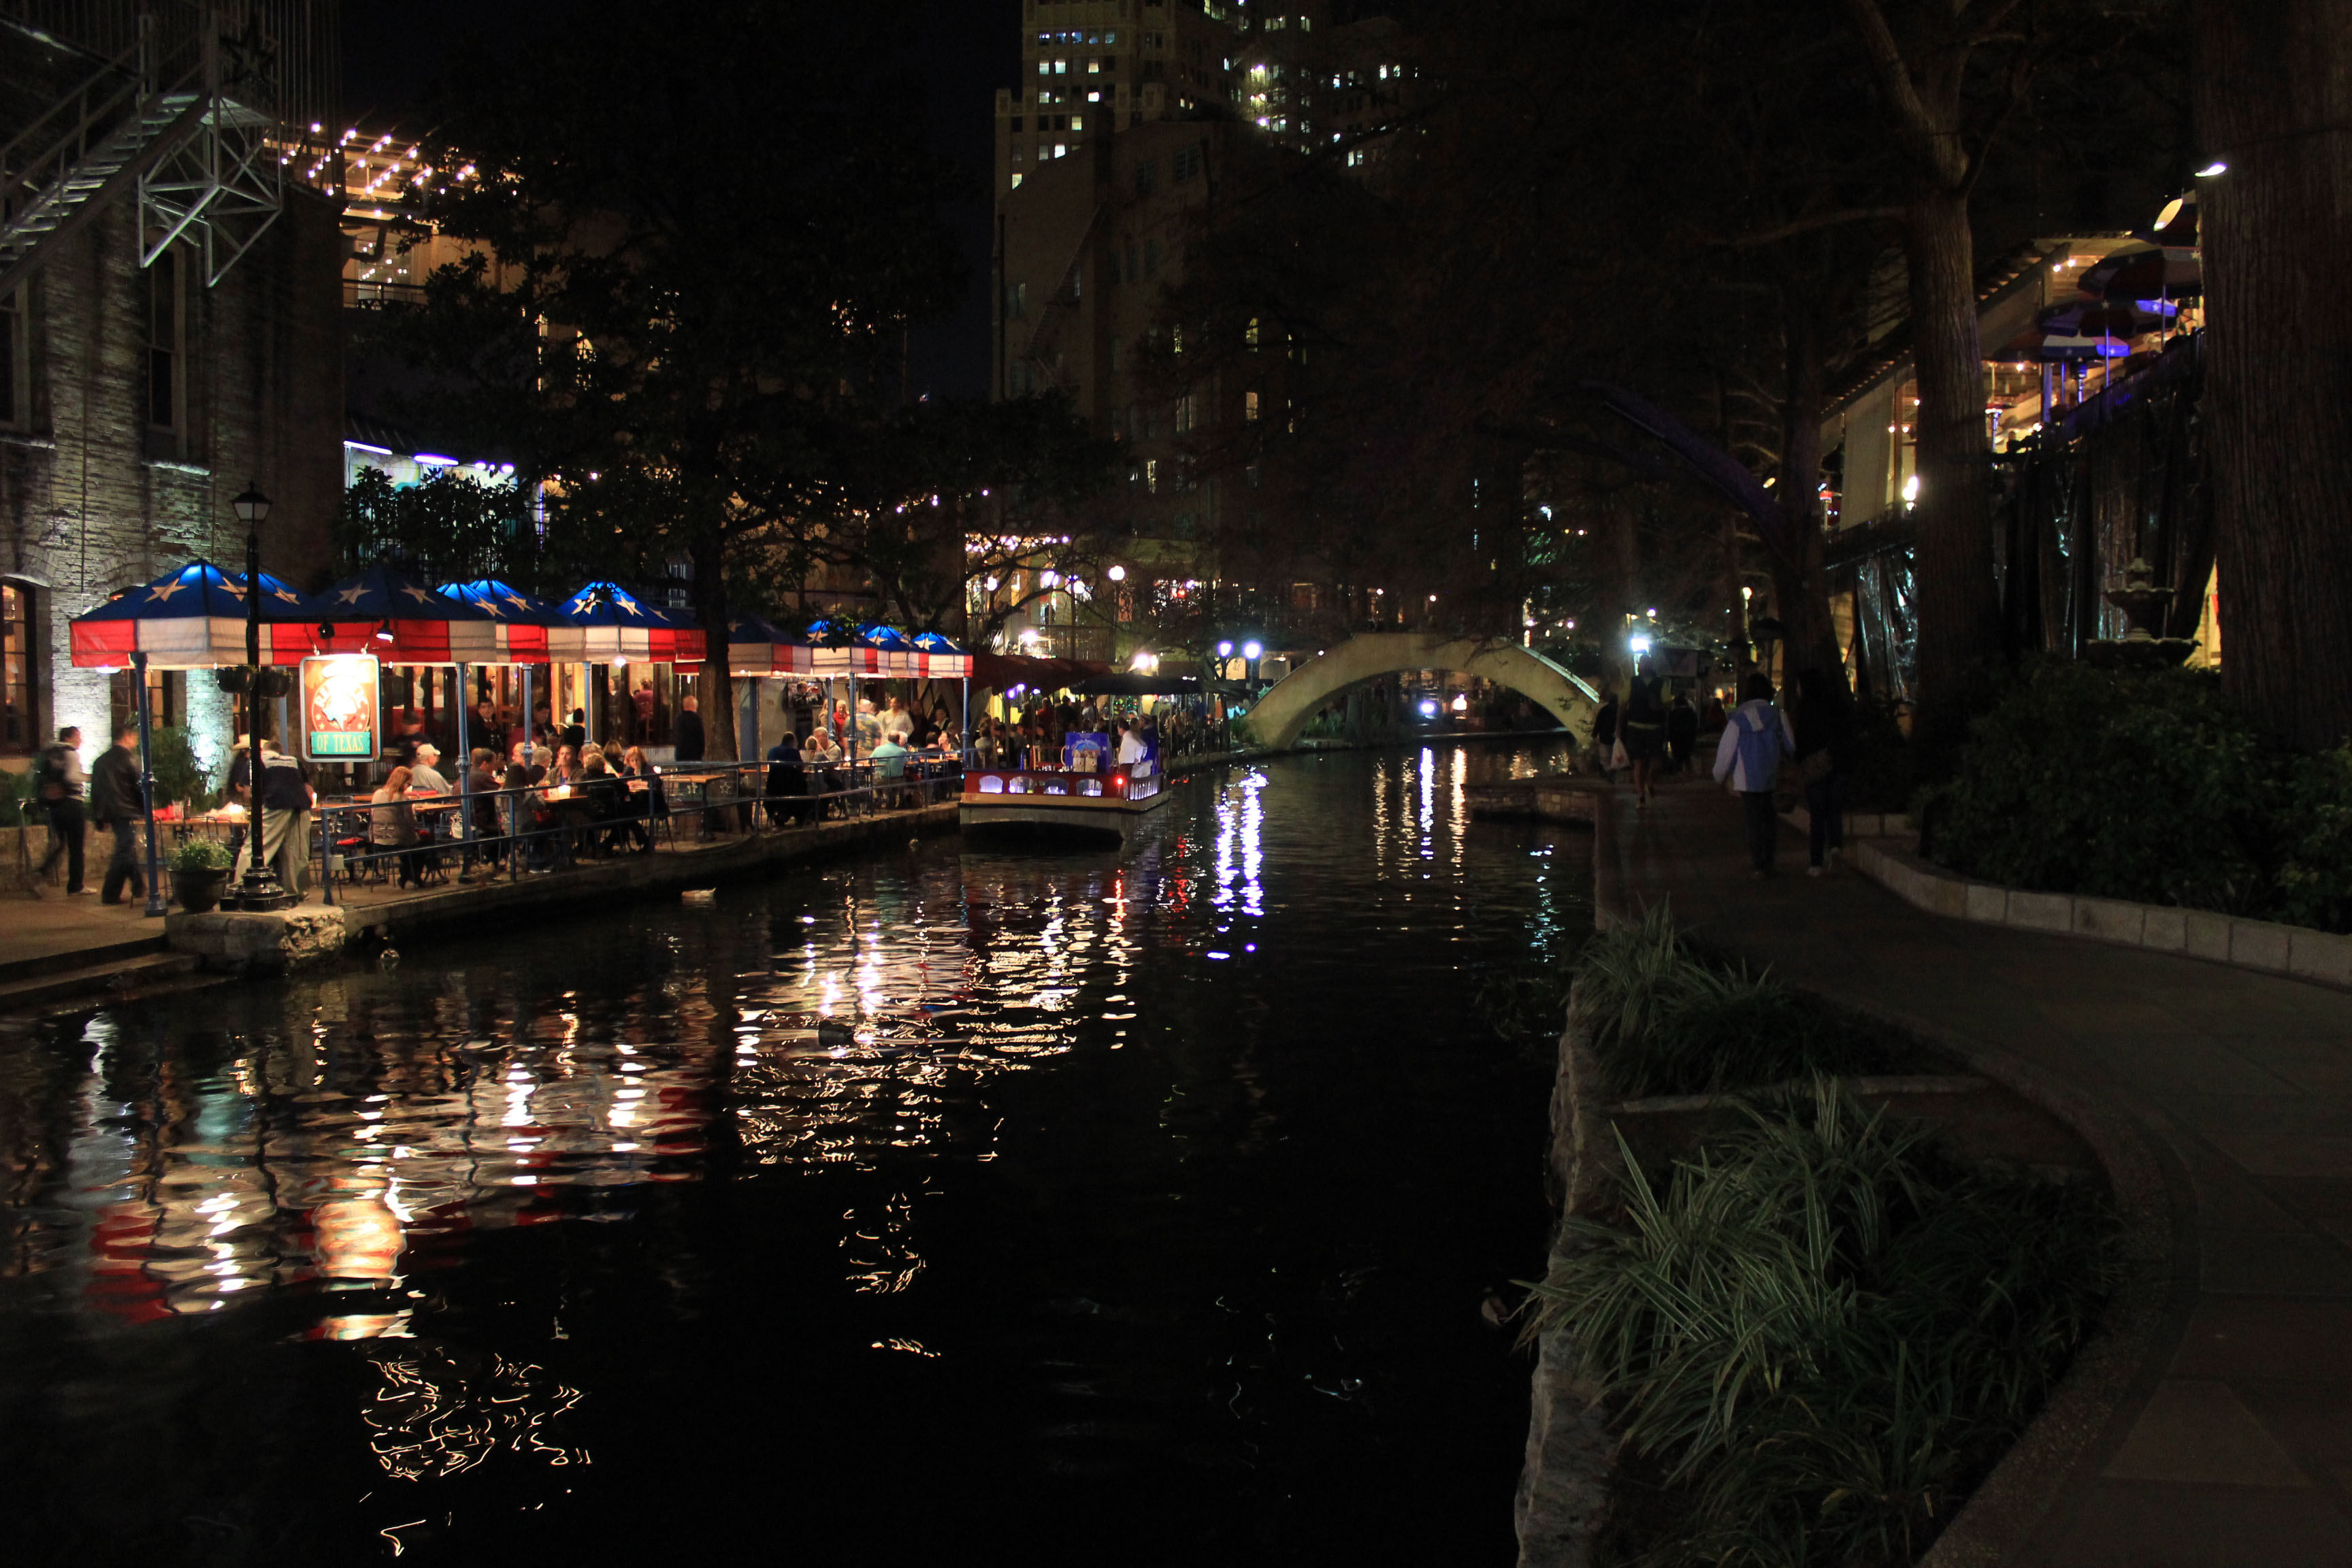 Riverwalk at Night in San Antonio, Texas image - Free stock photo